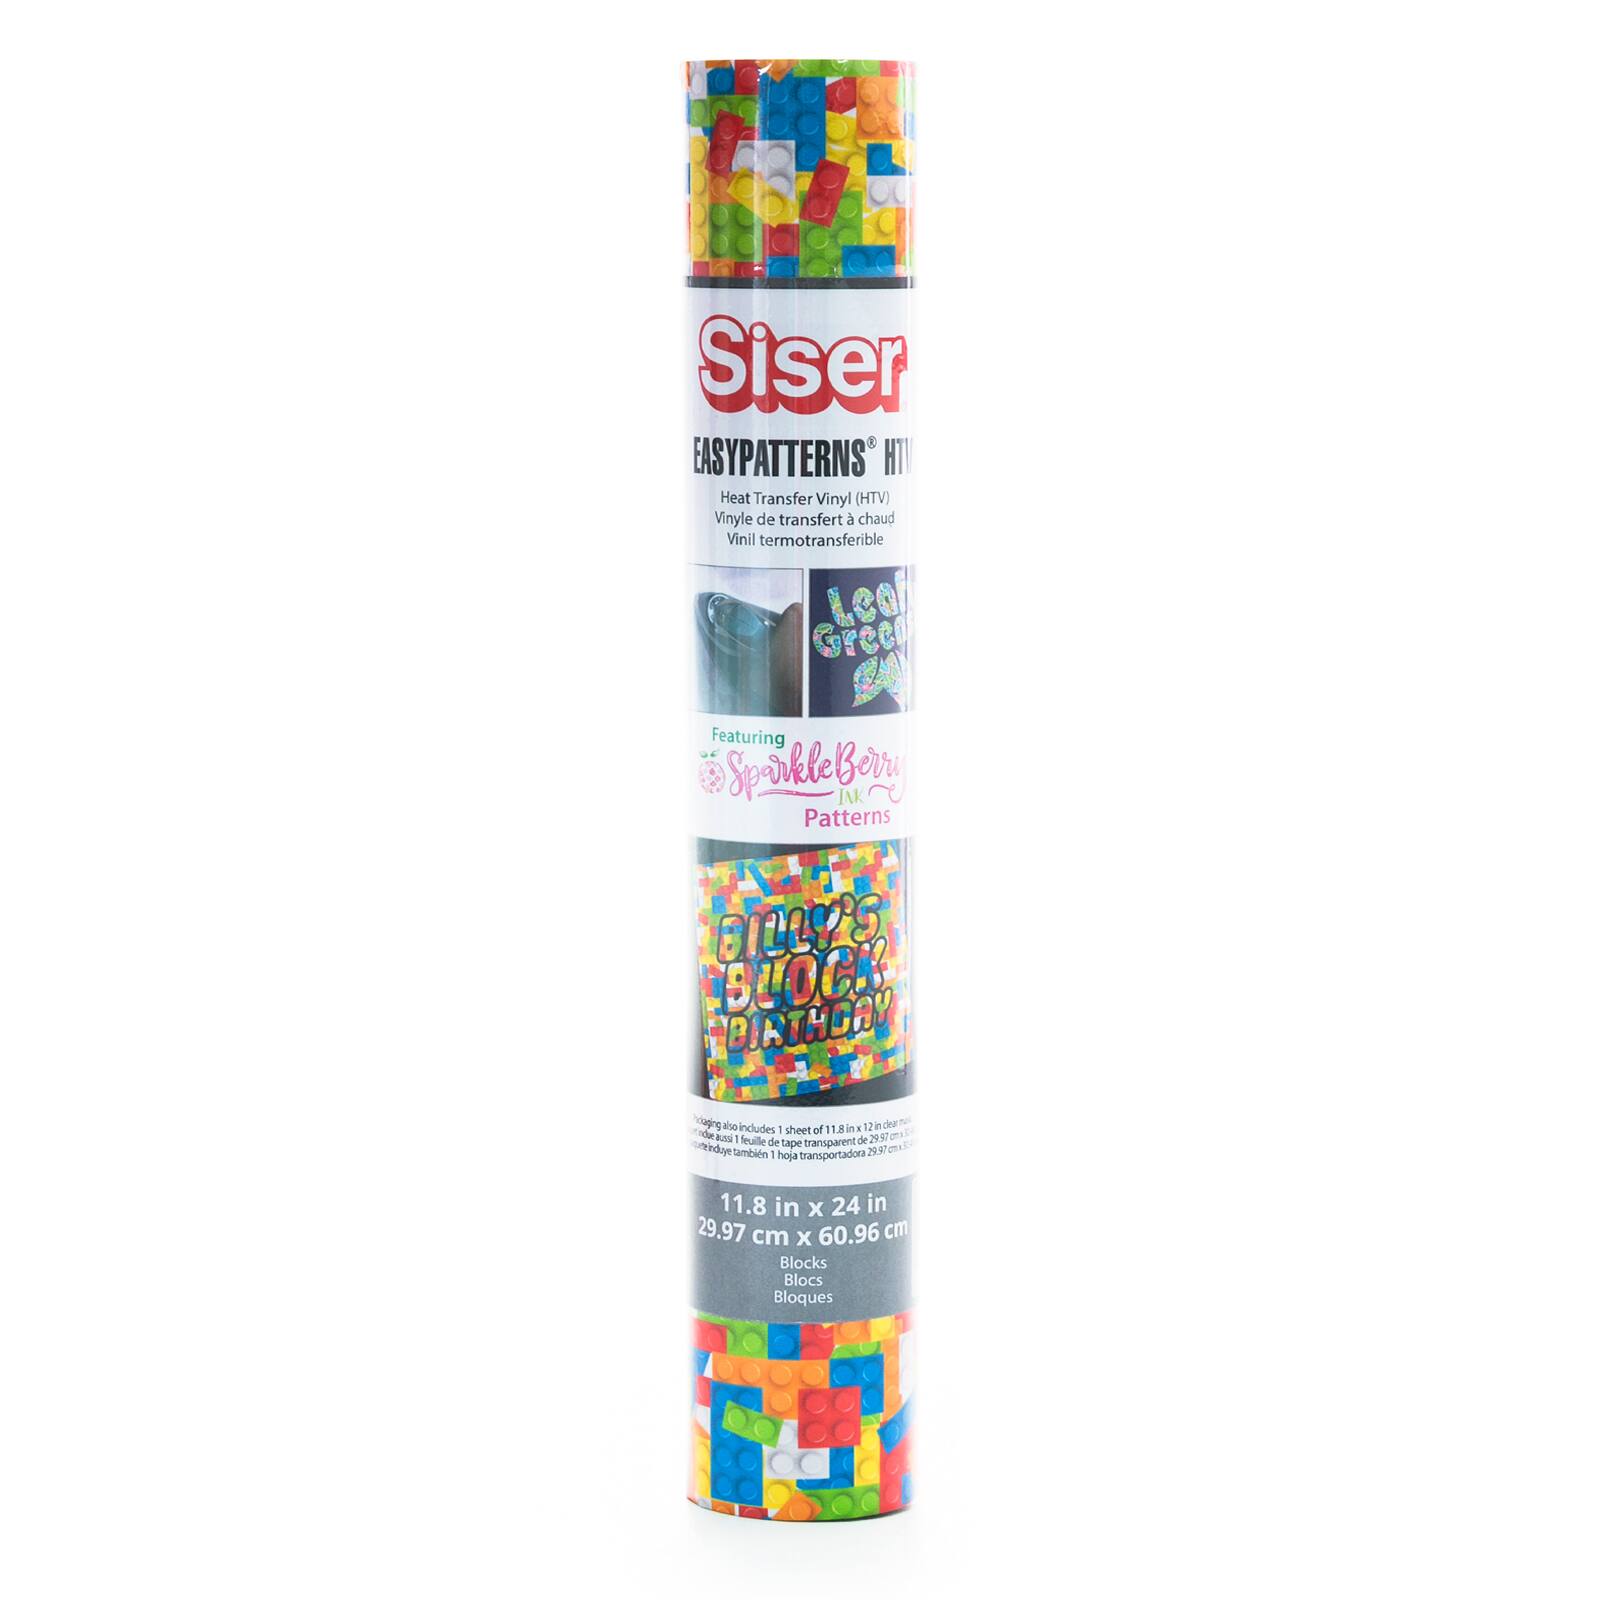 Siser® EasyPatterns® Heat Transfer Vinyl Featuring Sparkleberry Ink Patterns, Blocks | Michaels